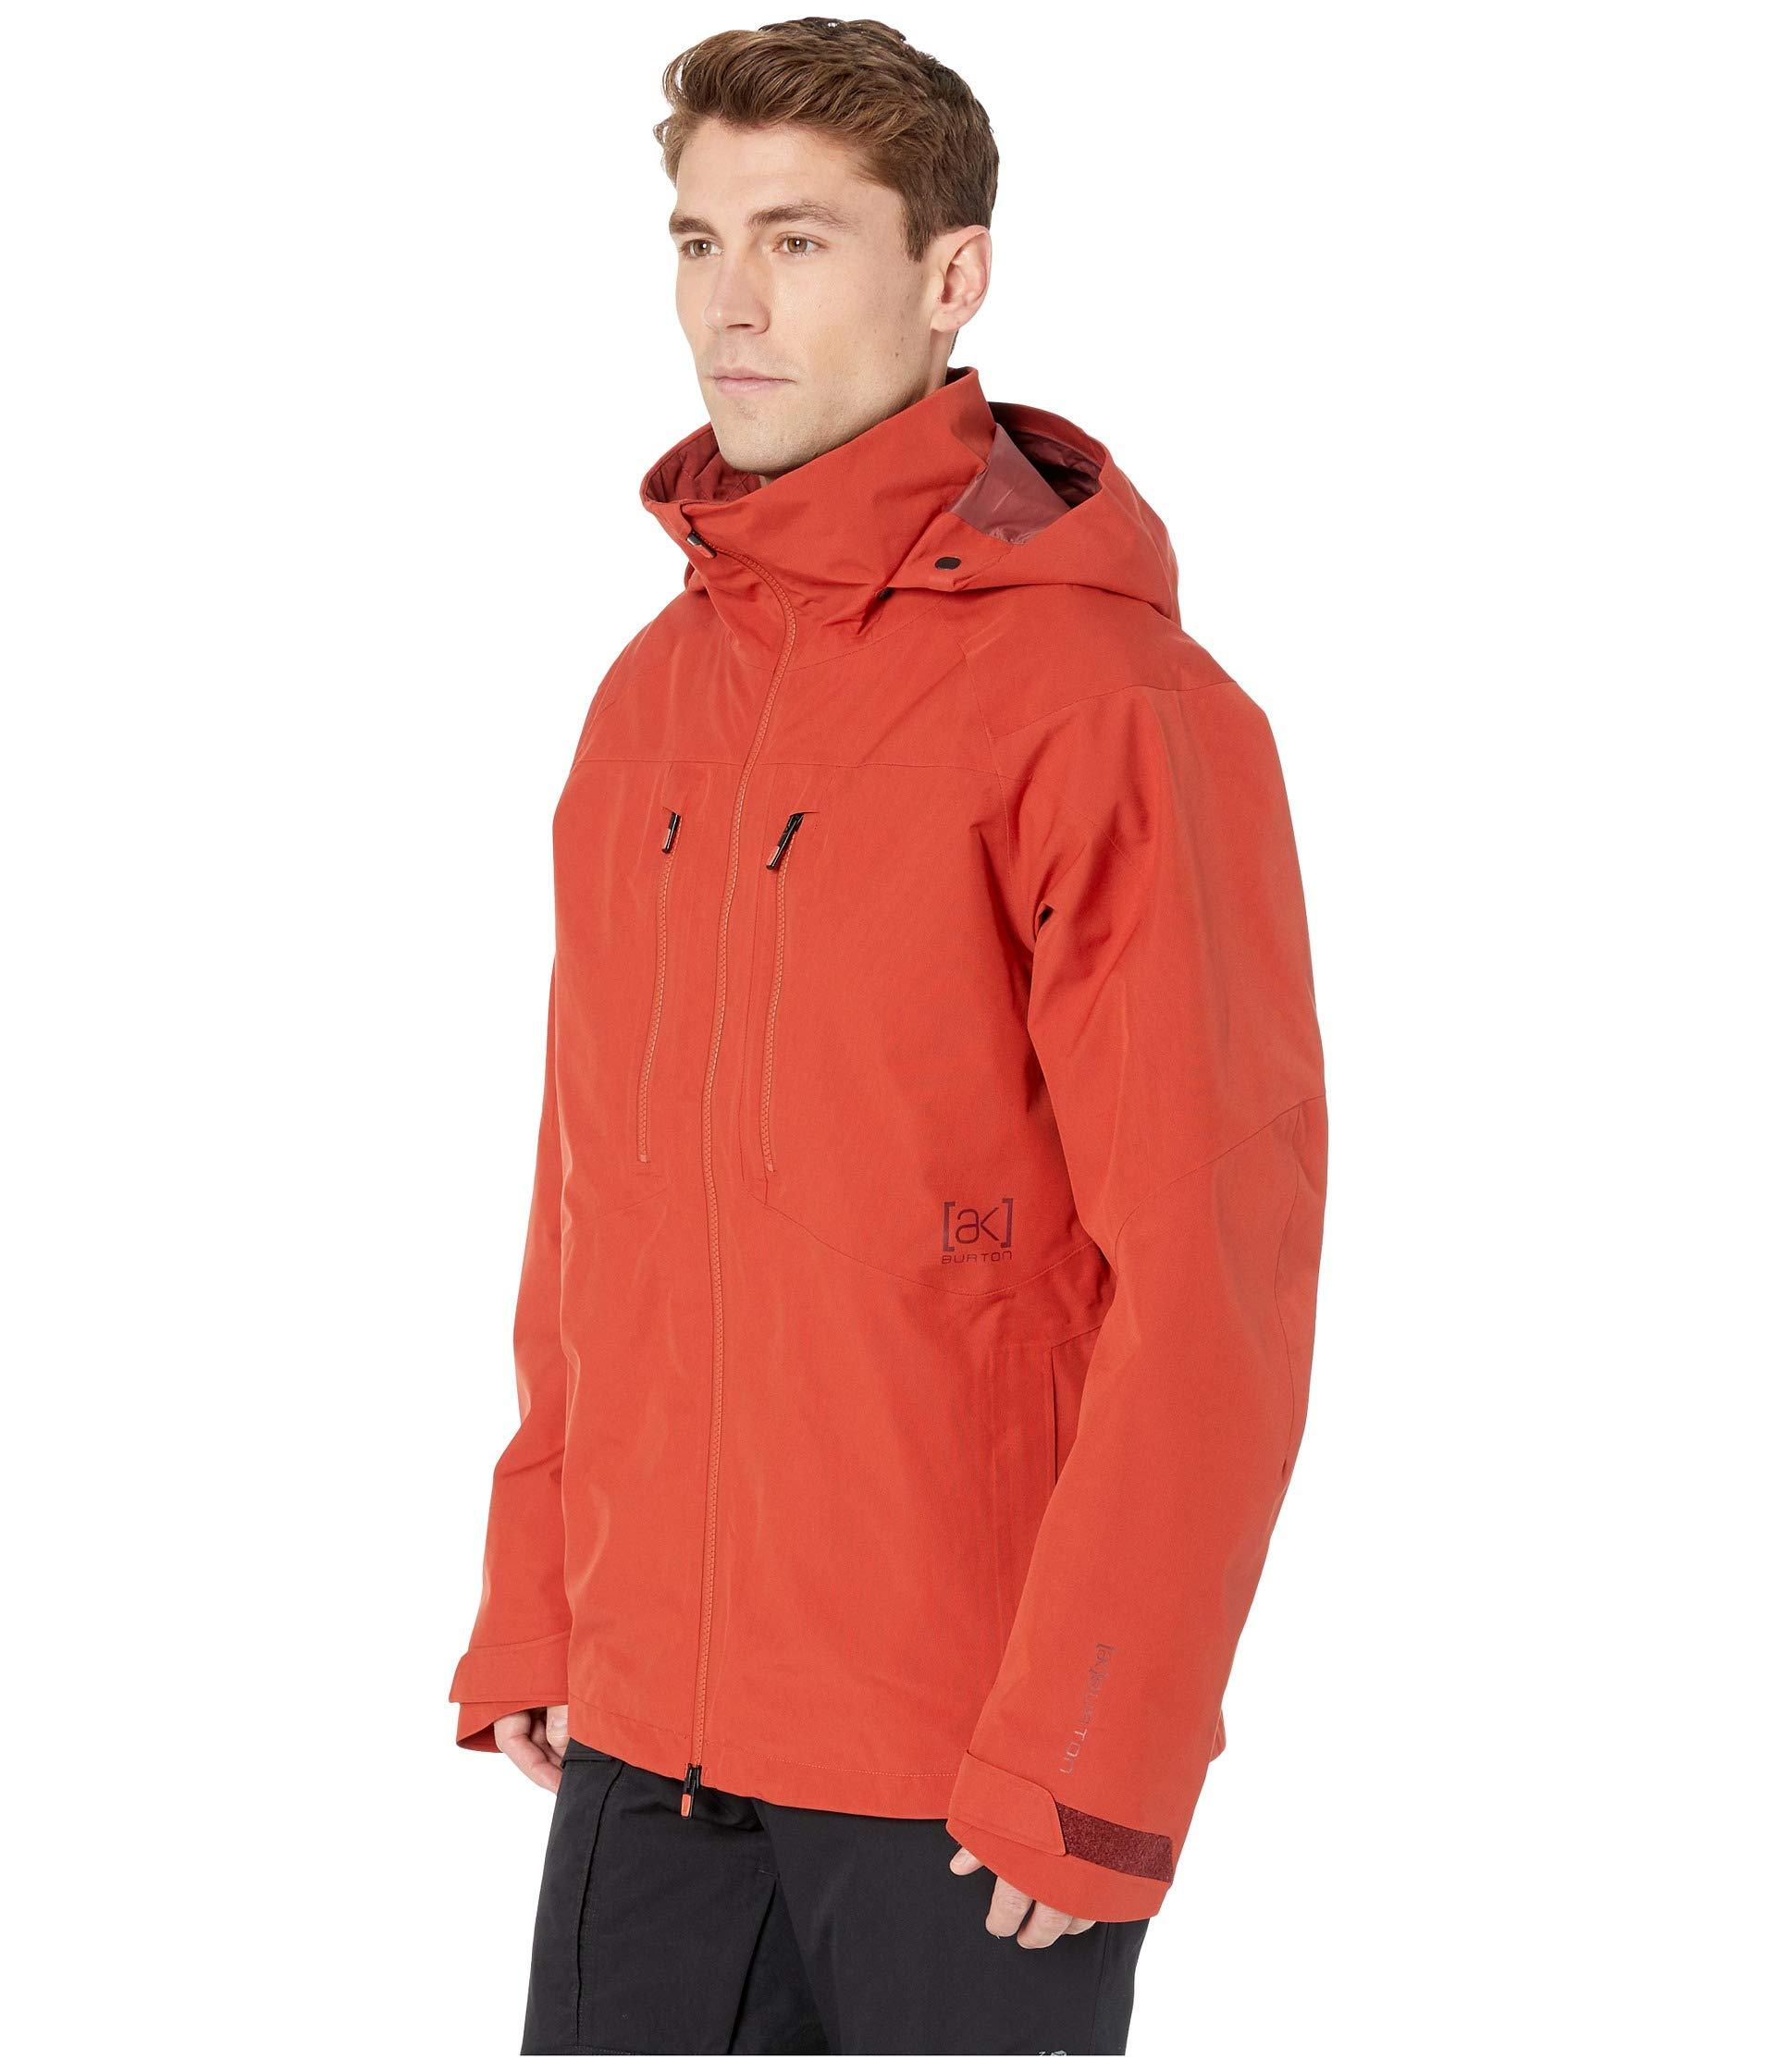 Burton Synthetic [ak] 2l Swash Jacket in Orange for Men - Lyst